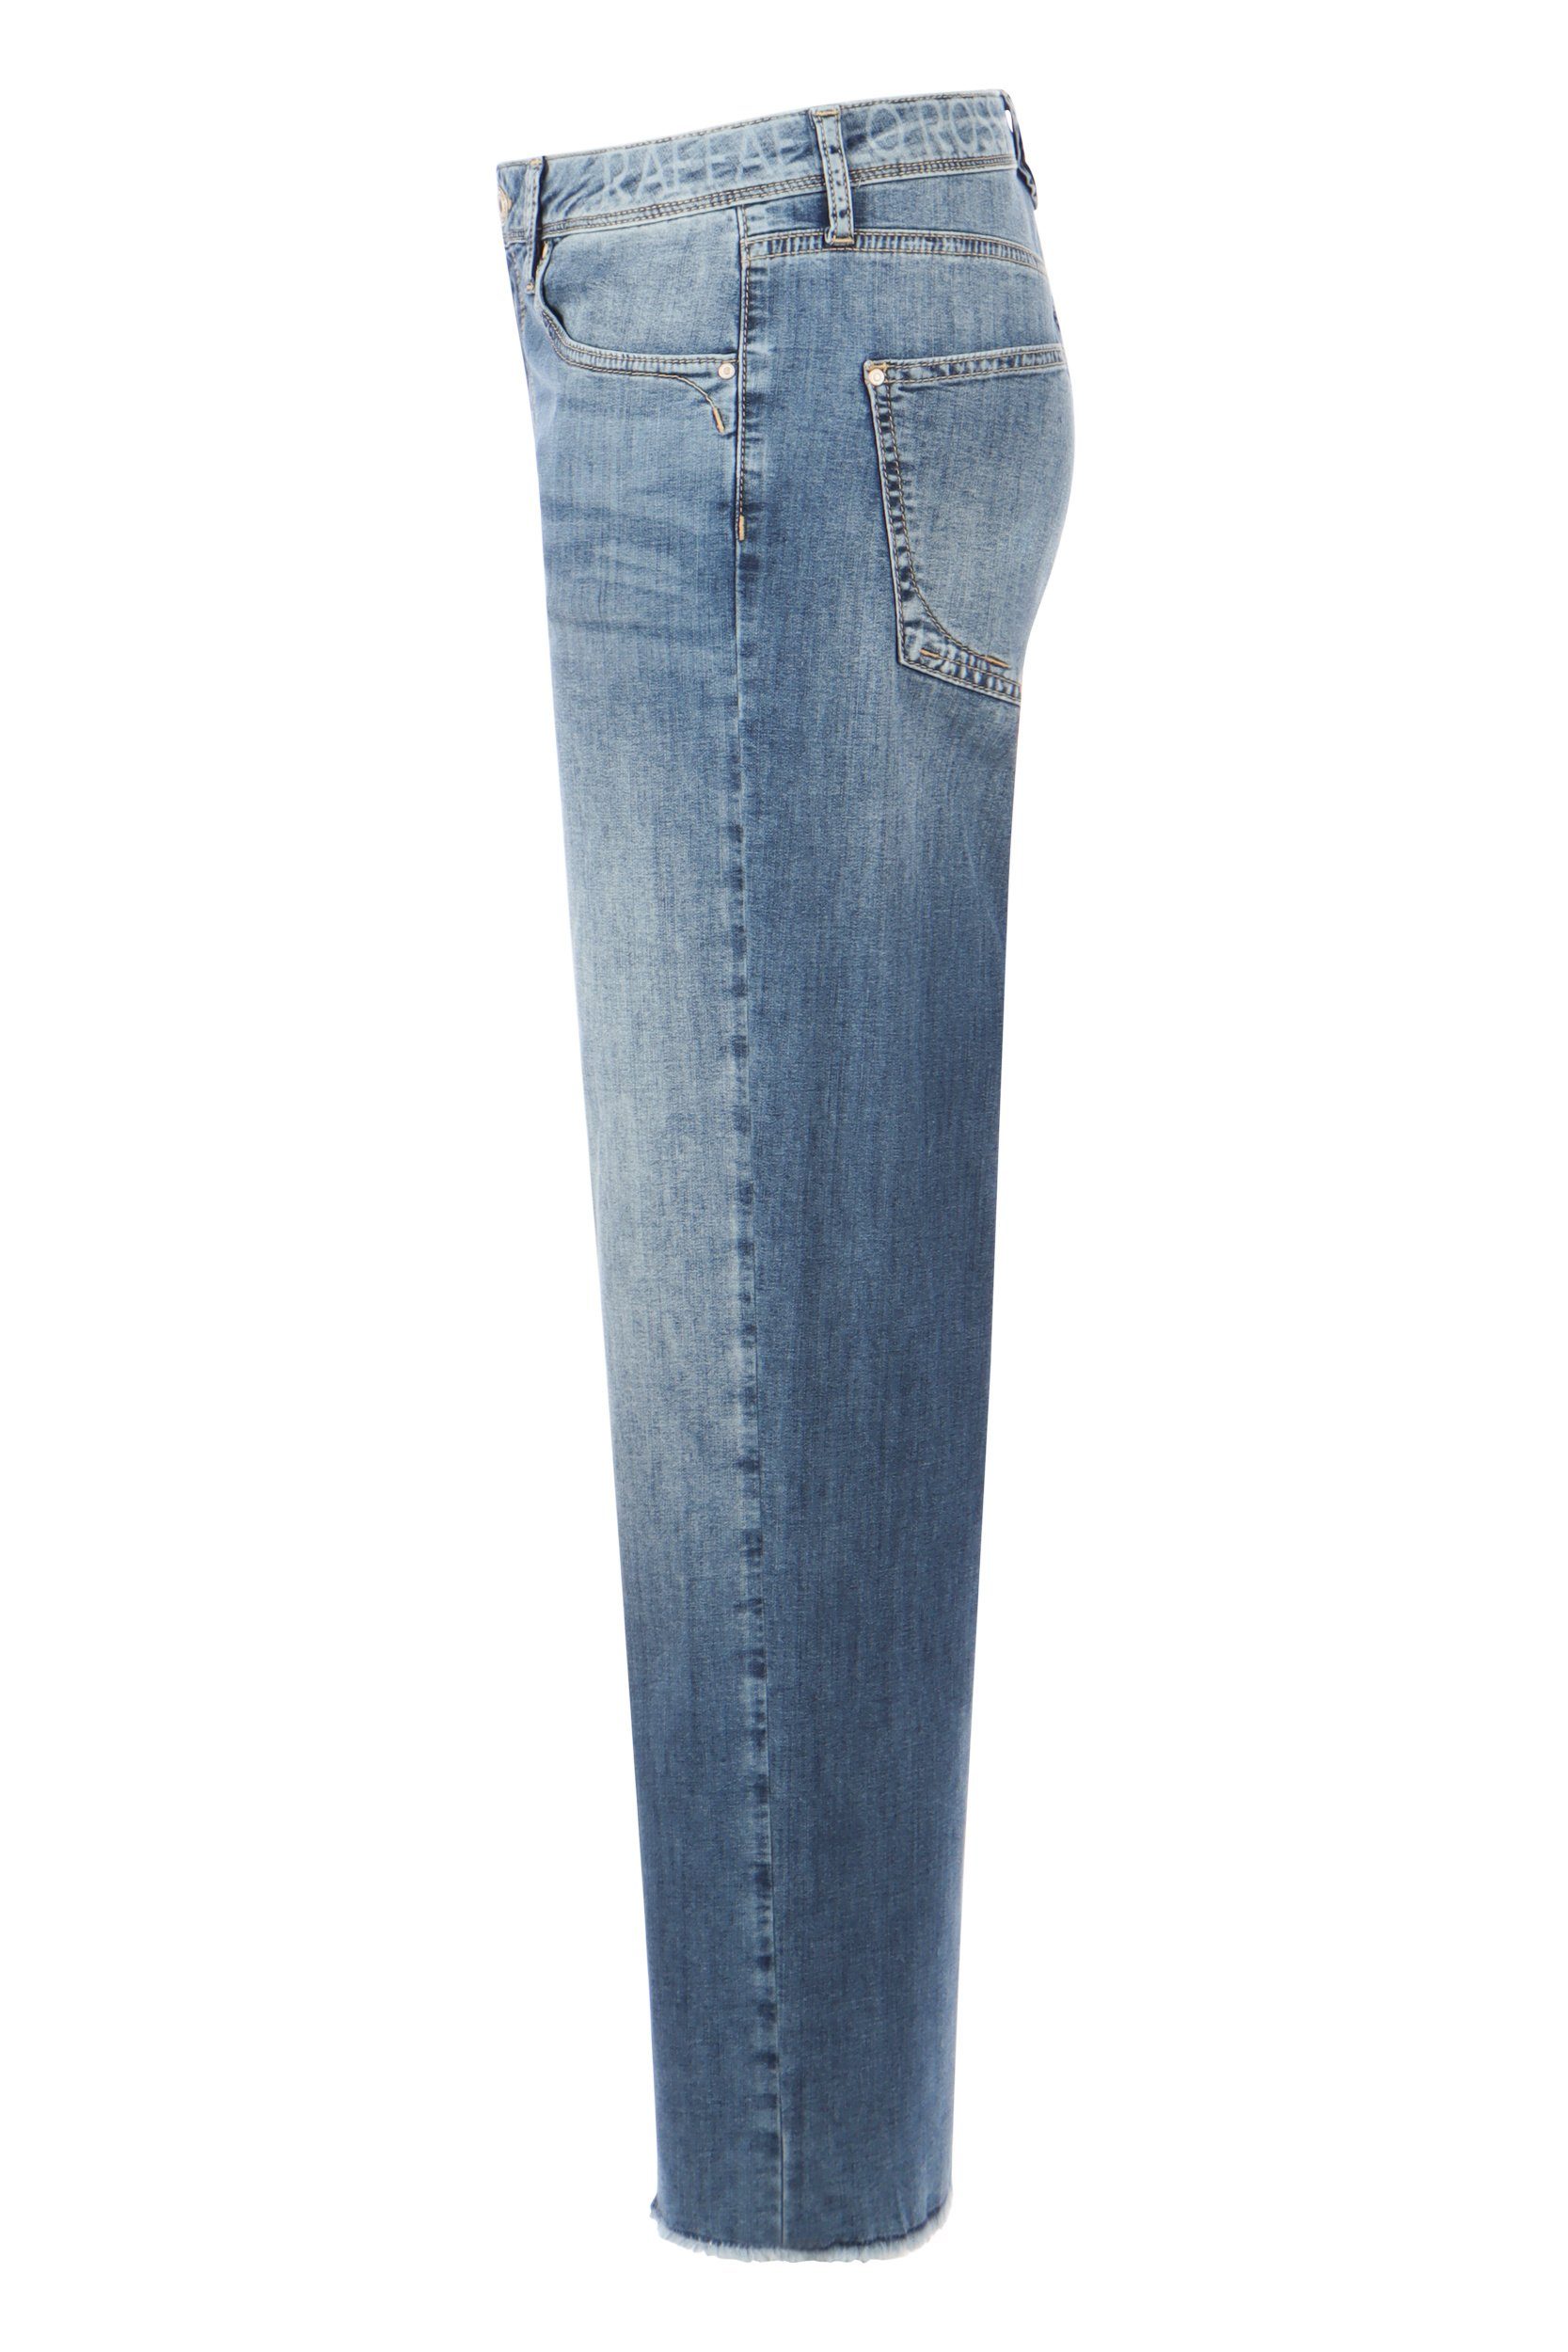 Raffaello Rossi 5-Pocket-Jeans Kira